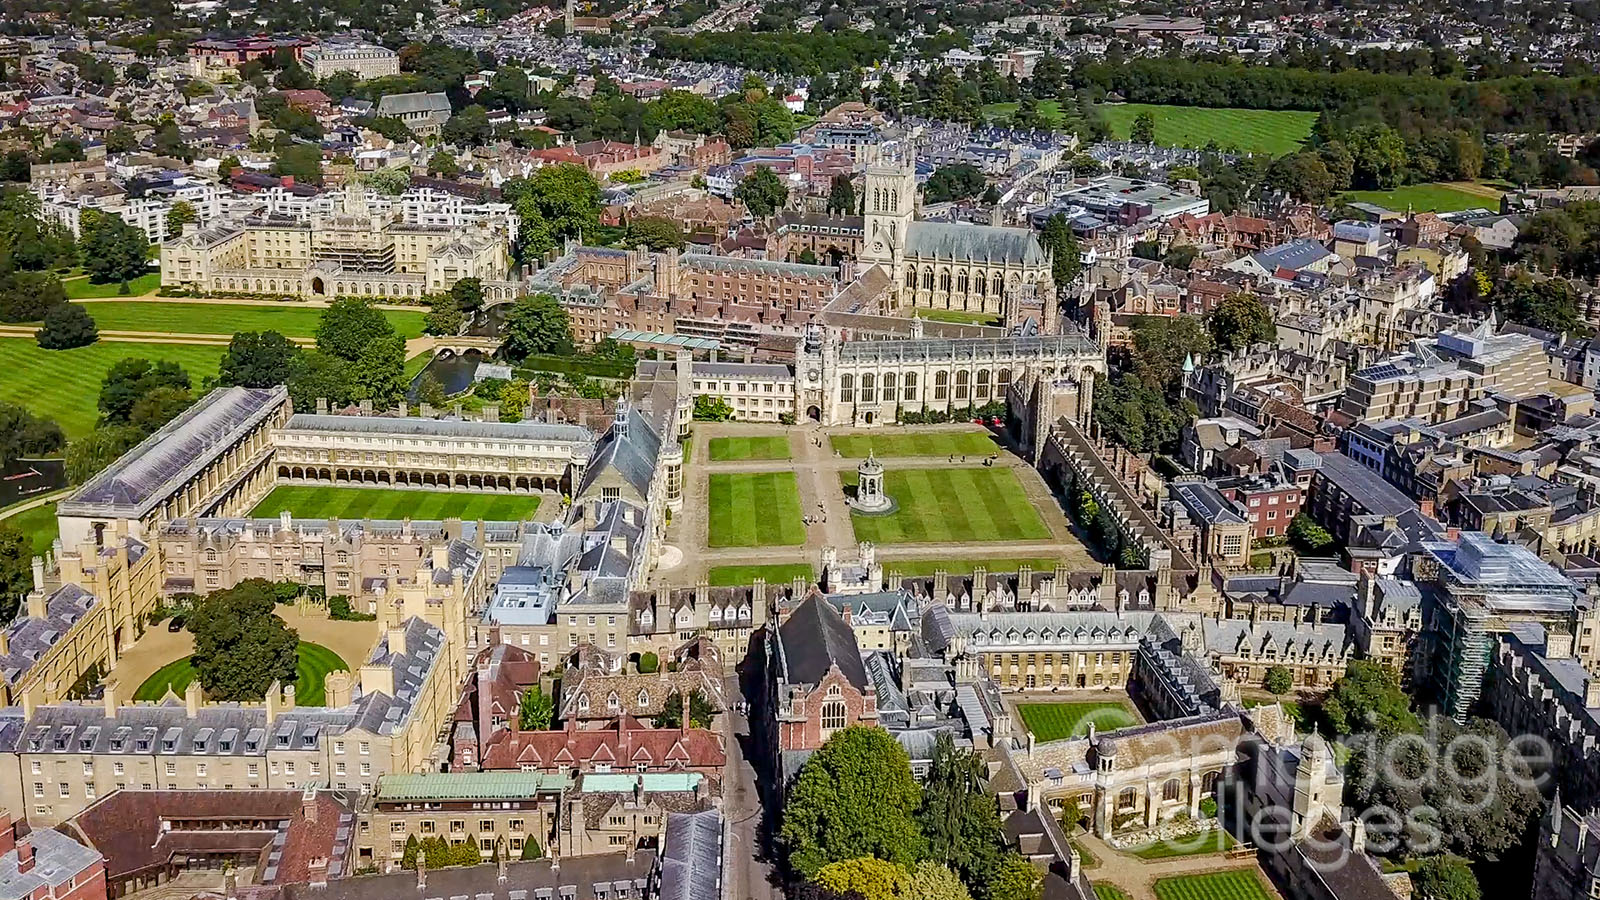 A bird's eye view of Trinity college, Cambridge